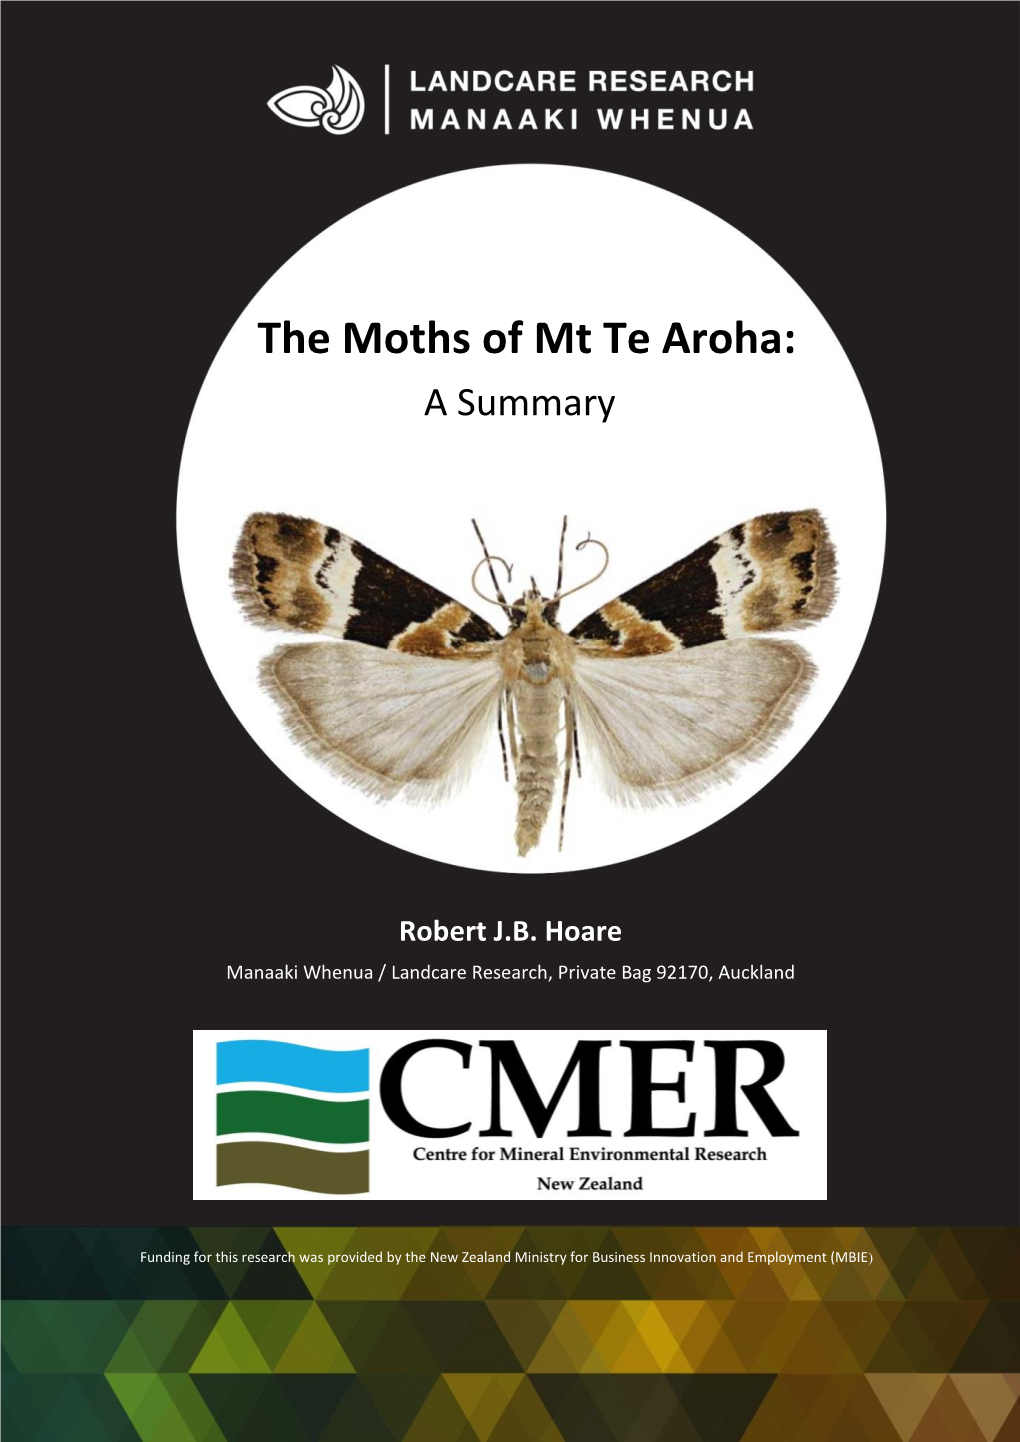 The Moths of Mt Te Aroha: a Summary